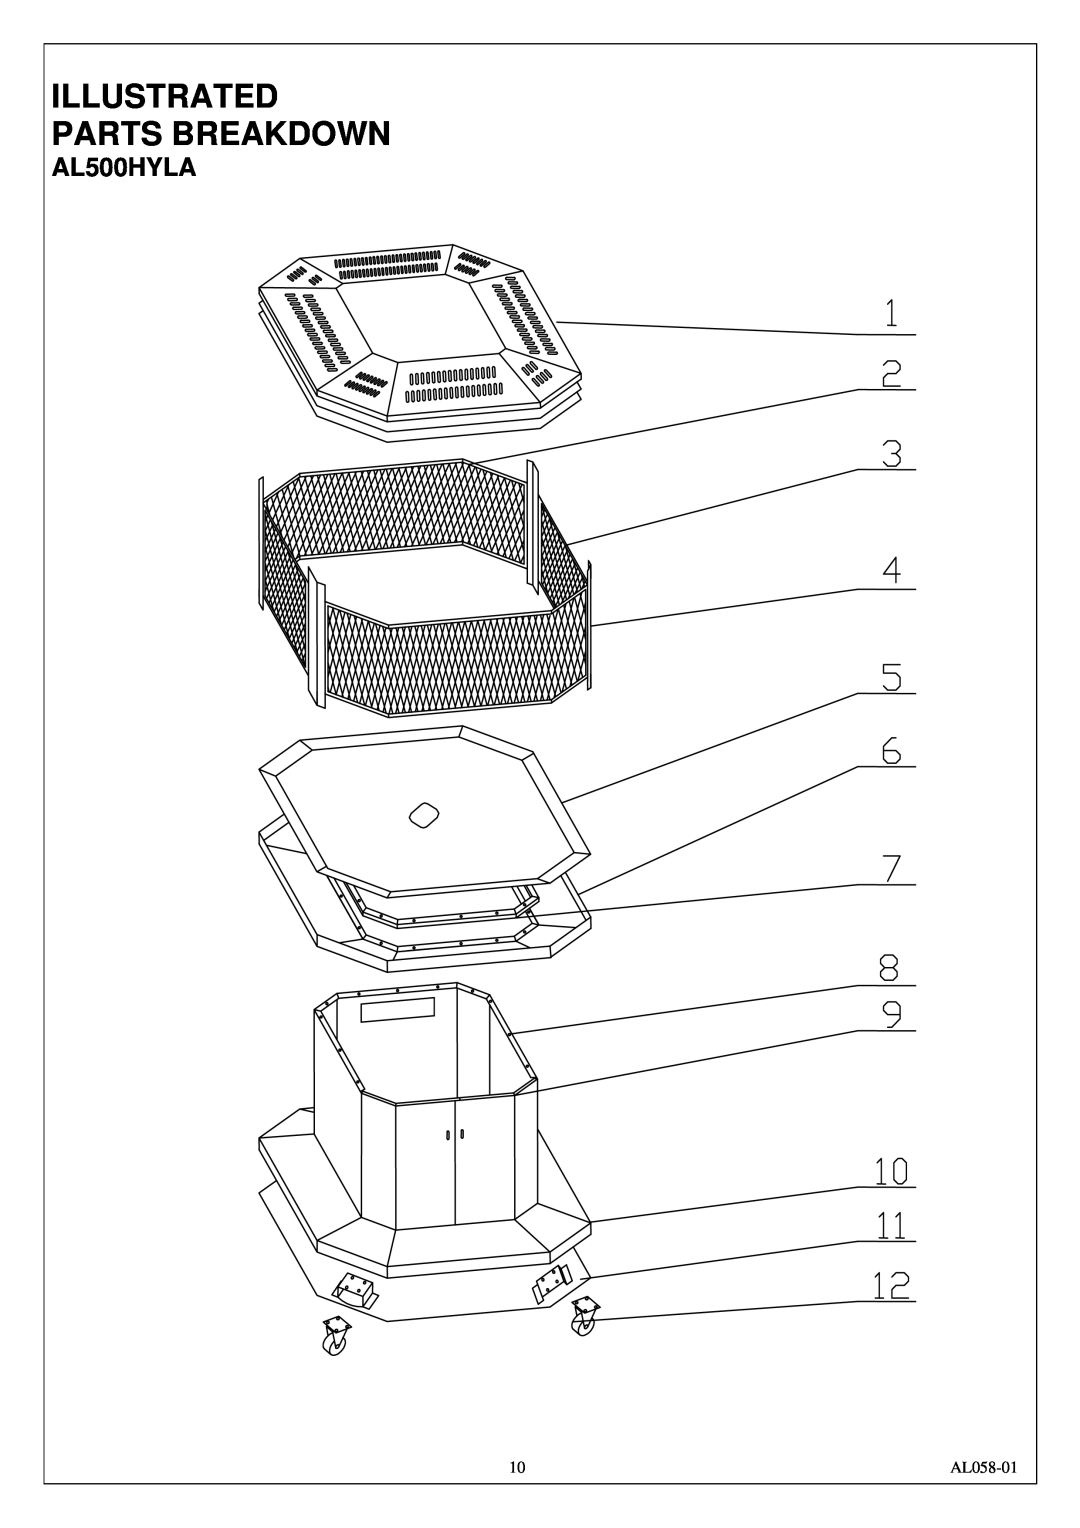 Procom AL500HYLA installation manual Illustrated, Parts Breakdown, AL058-01 